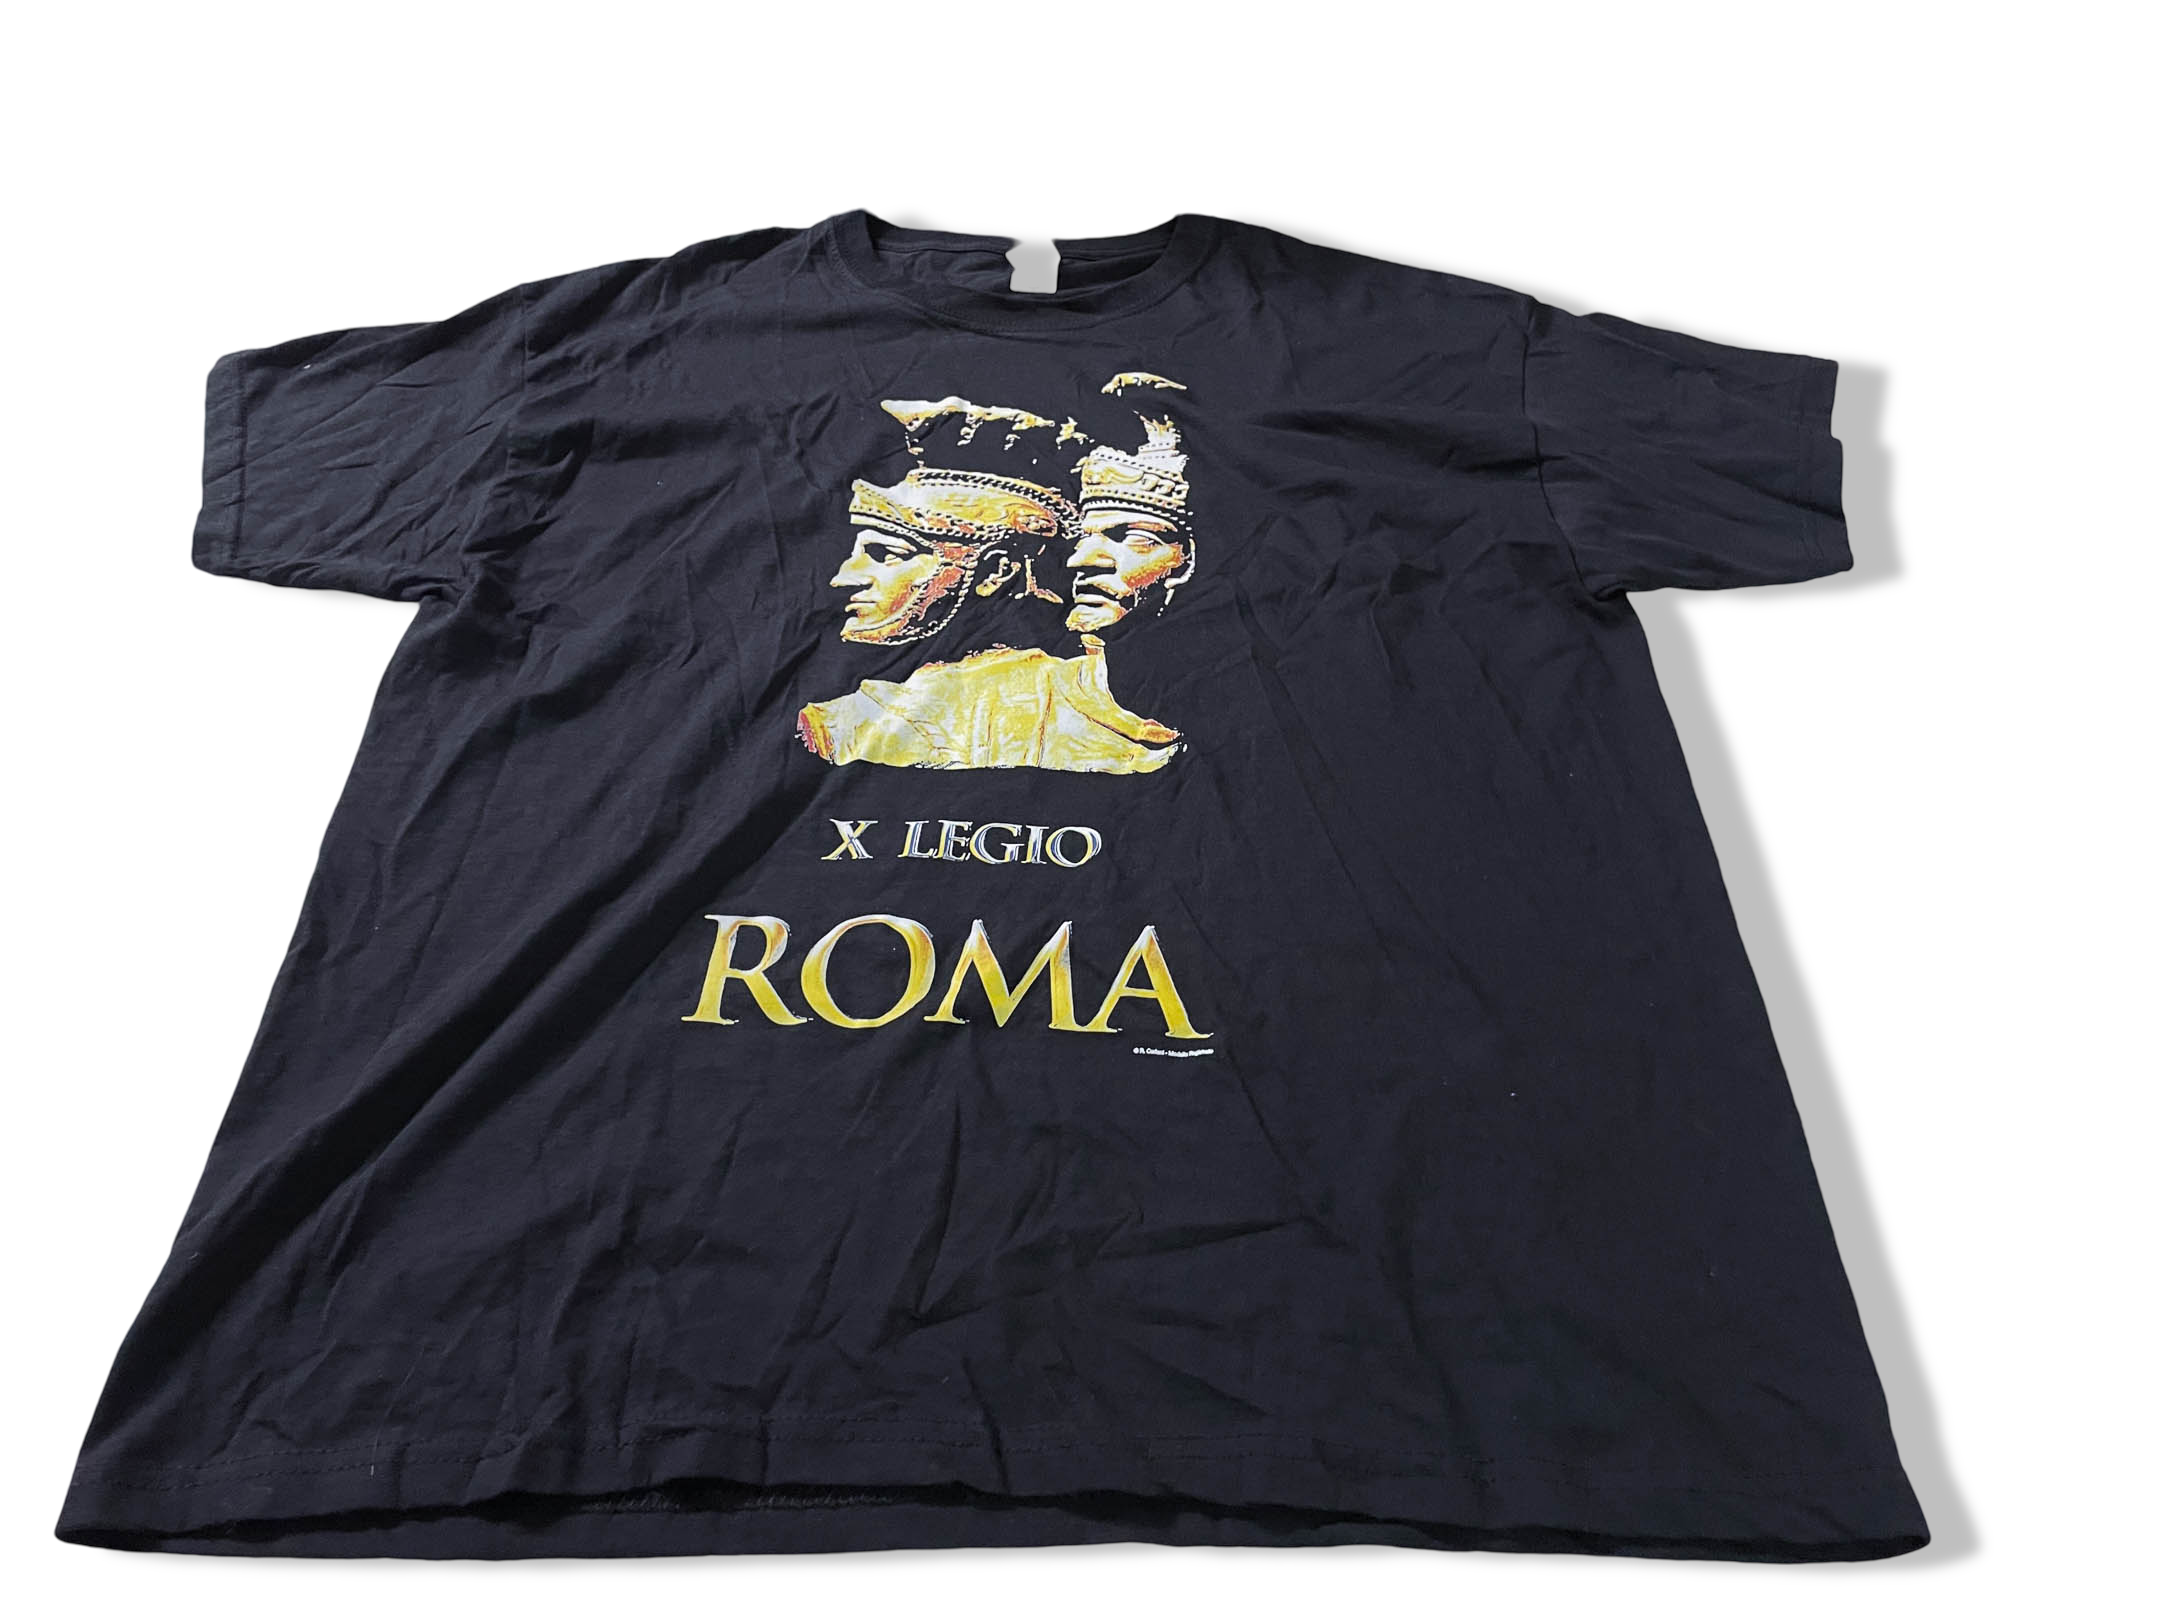 Vintage Men's X Legio Roma Graphics black tees in XL|L31 W22| SKU 4106